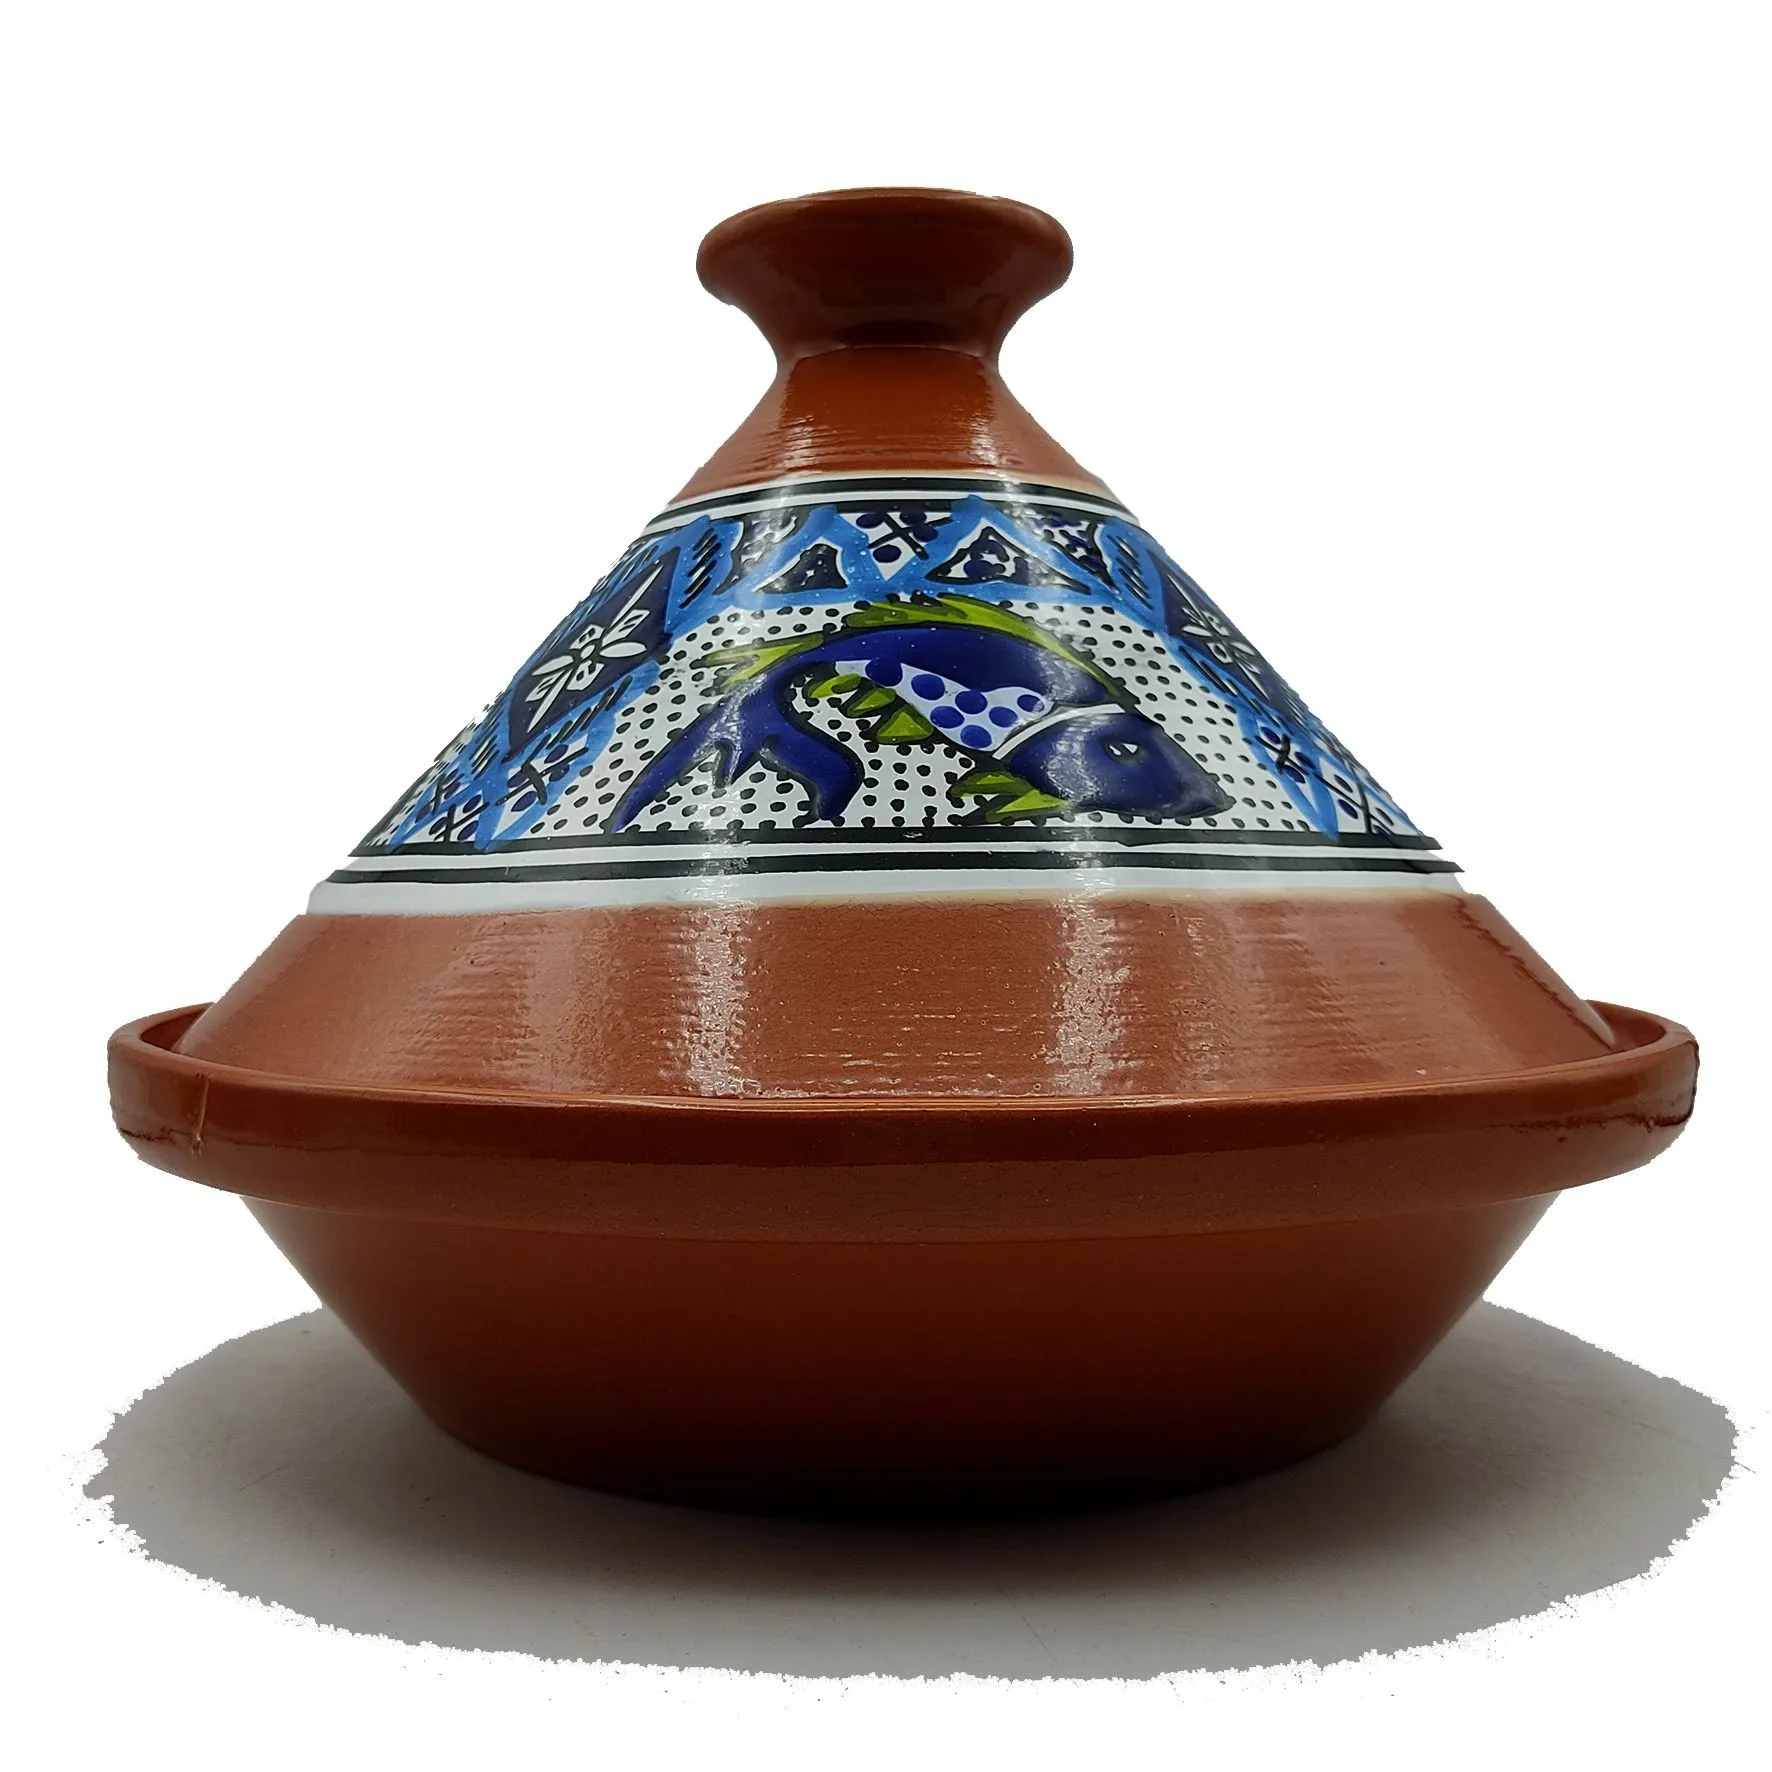 Olla de terracota con plato étnico marroquí Tunisino de 27 cm de longitud Tajine 3010201101 